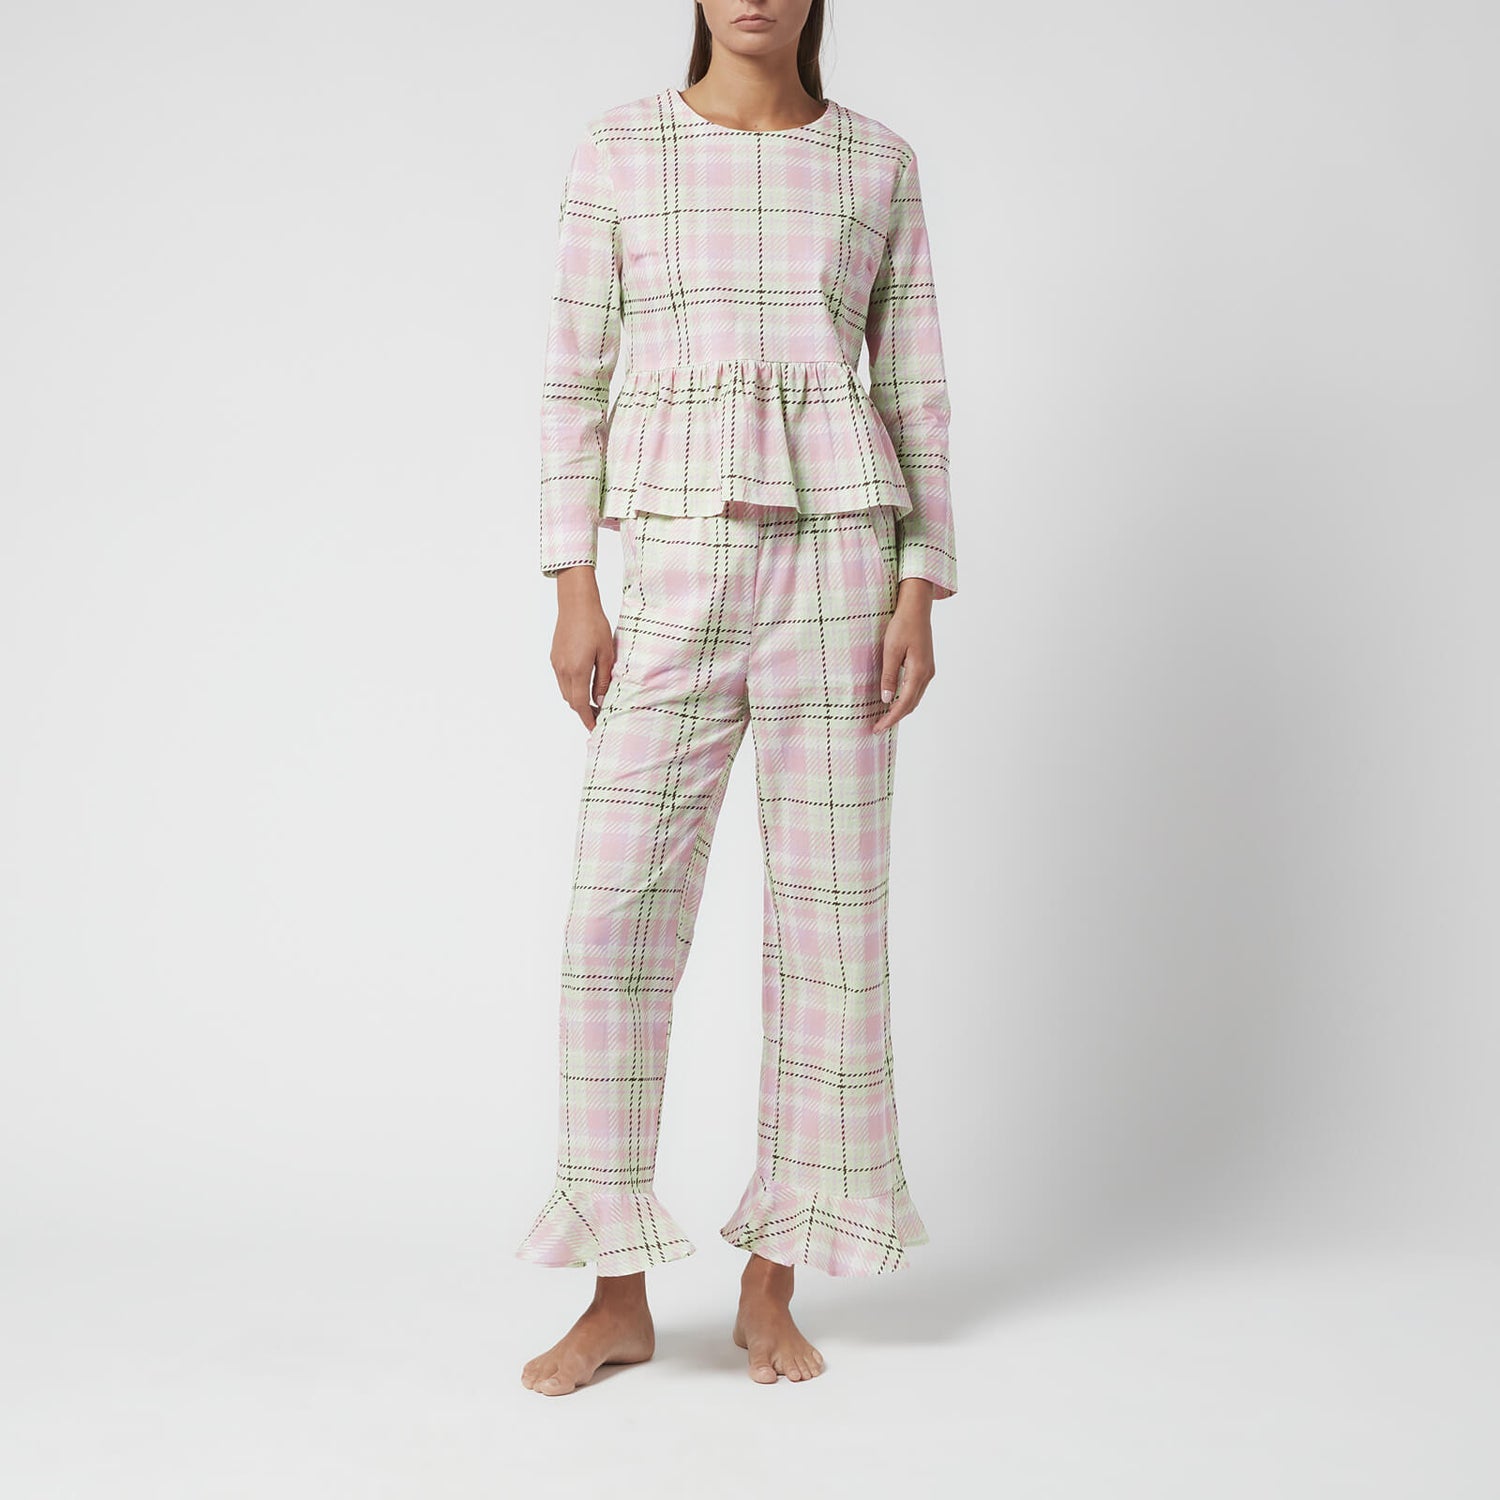 Olivia Rubin Women's Marianne Pyjamas - Pink Green Check - S